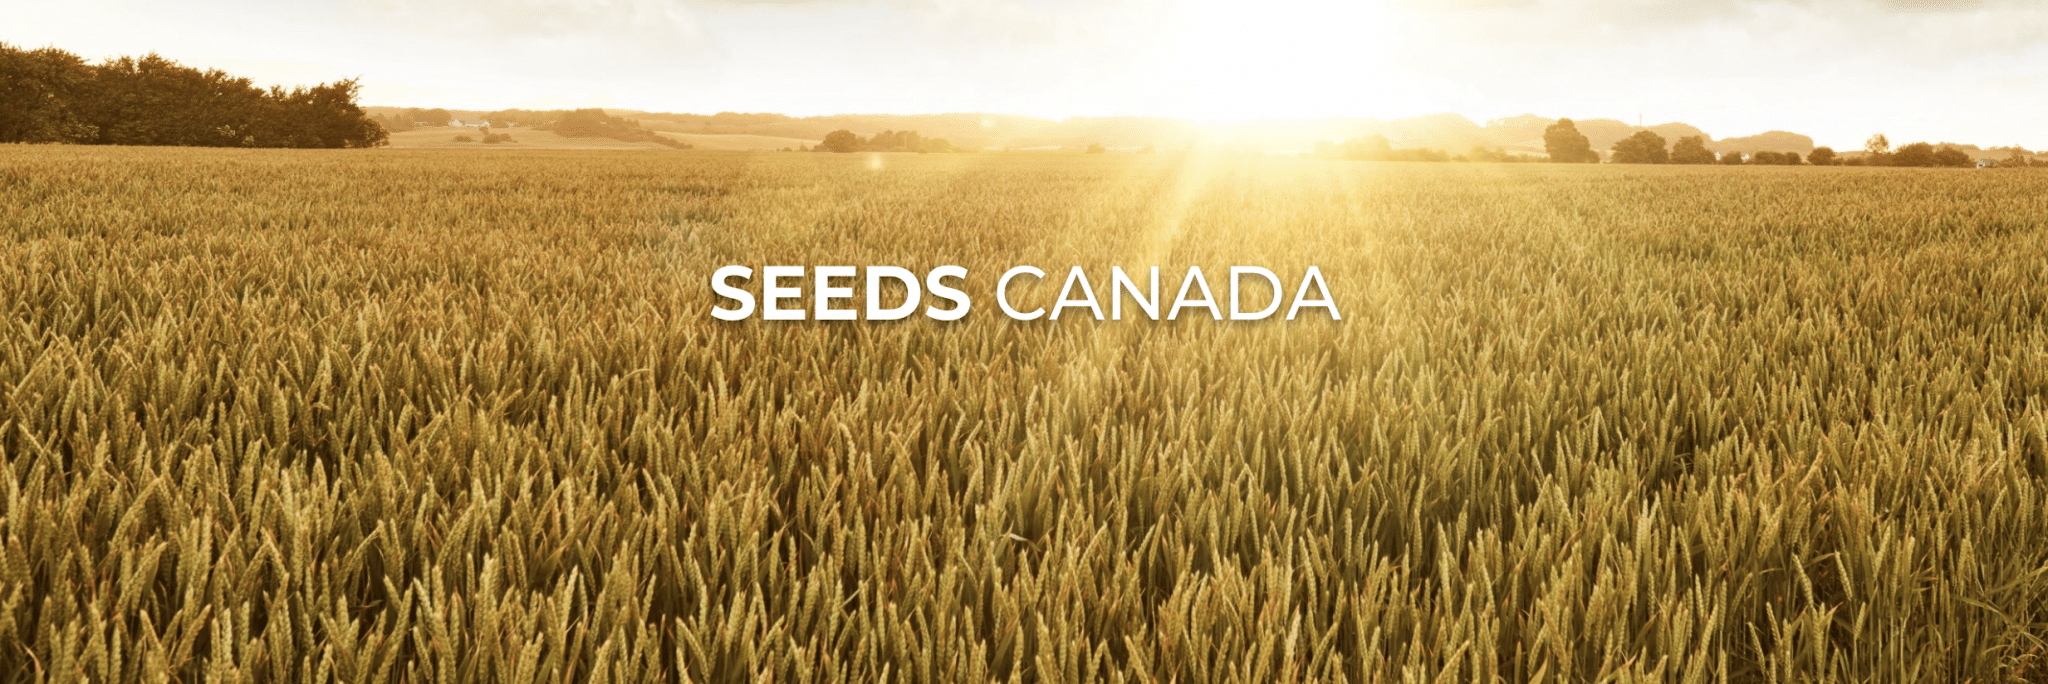 Seeds Canada